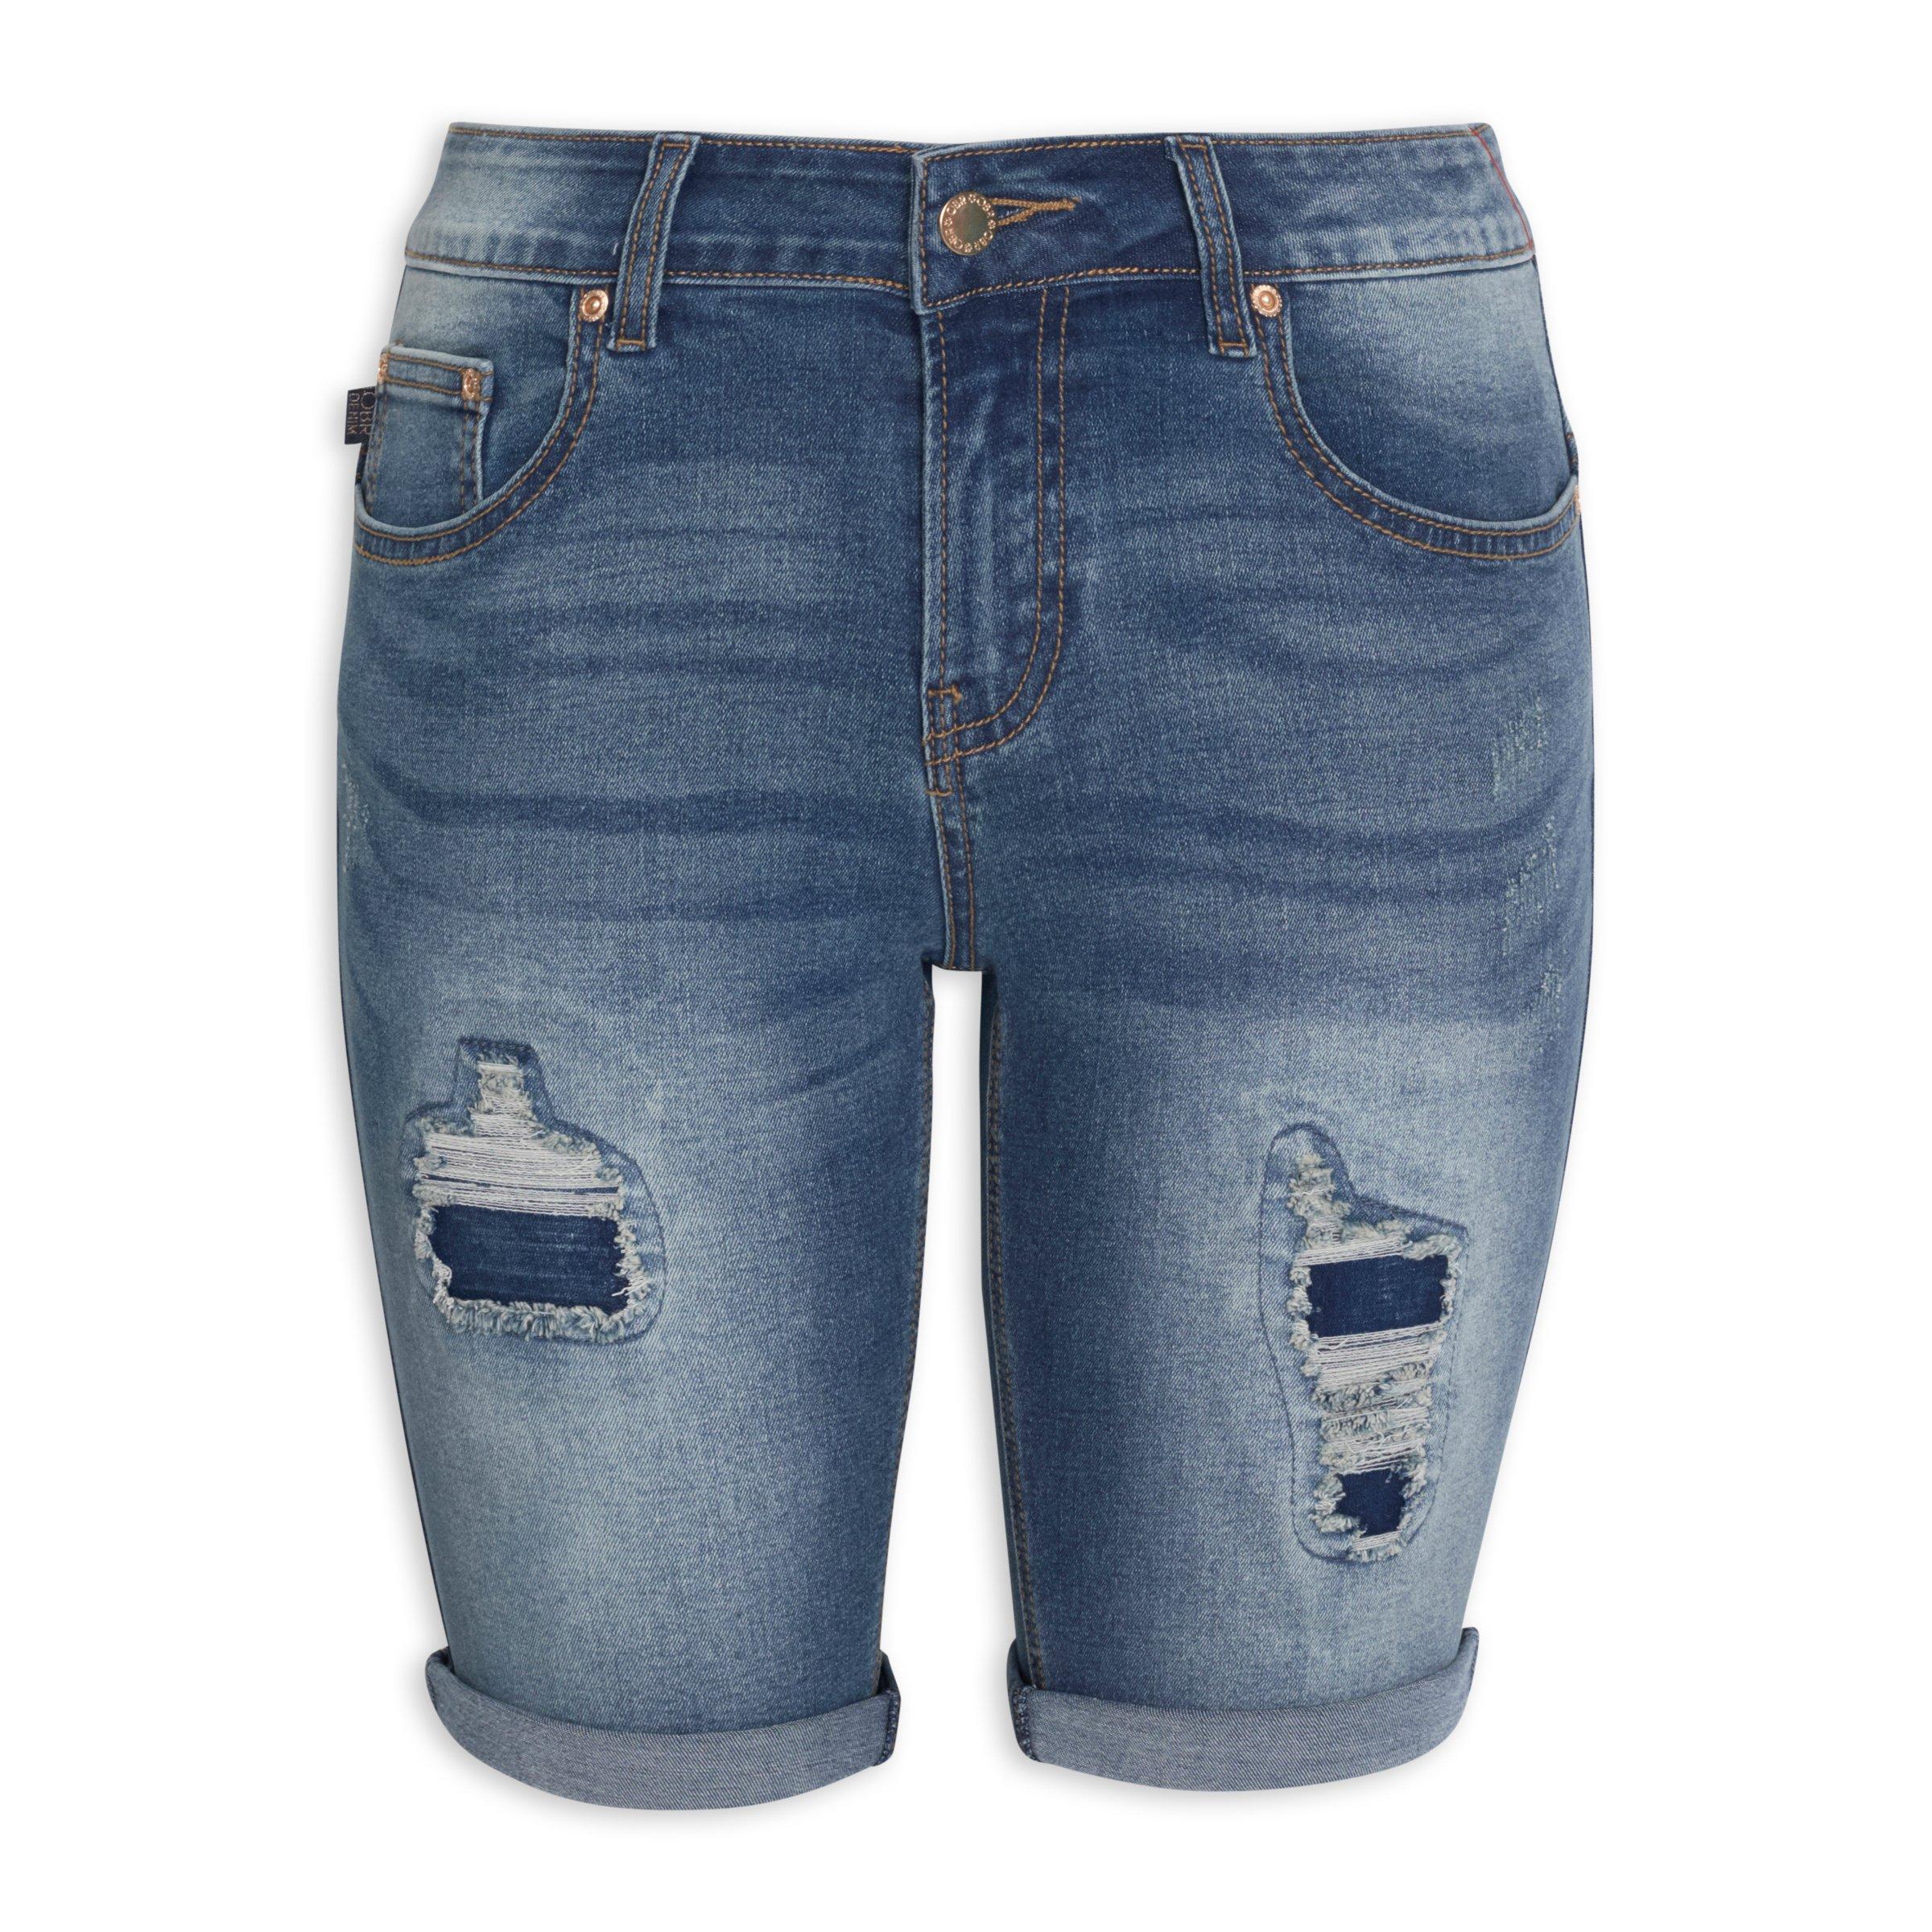 Buy OBR Denim Ripped Shorts Online | Truworths